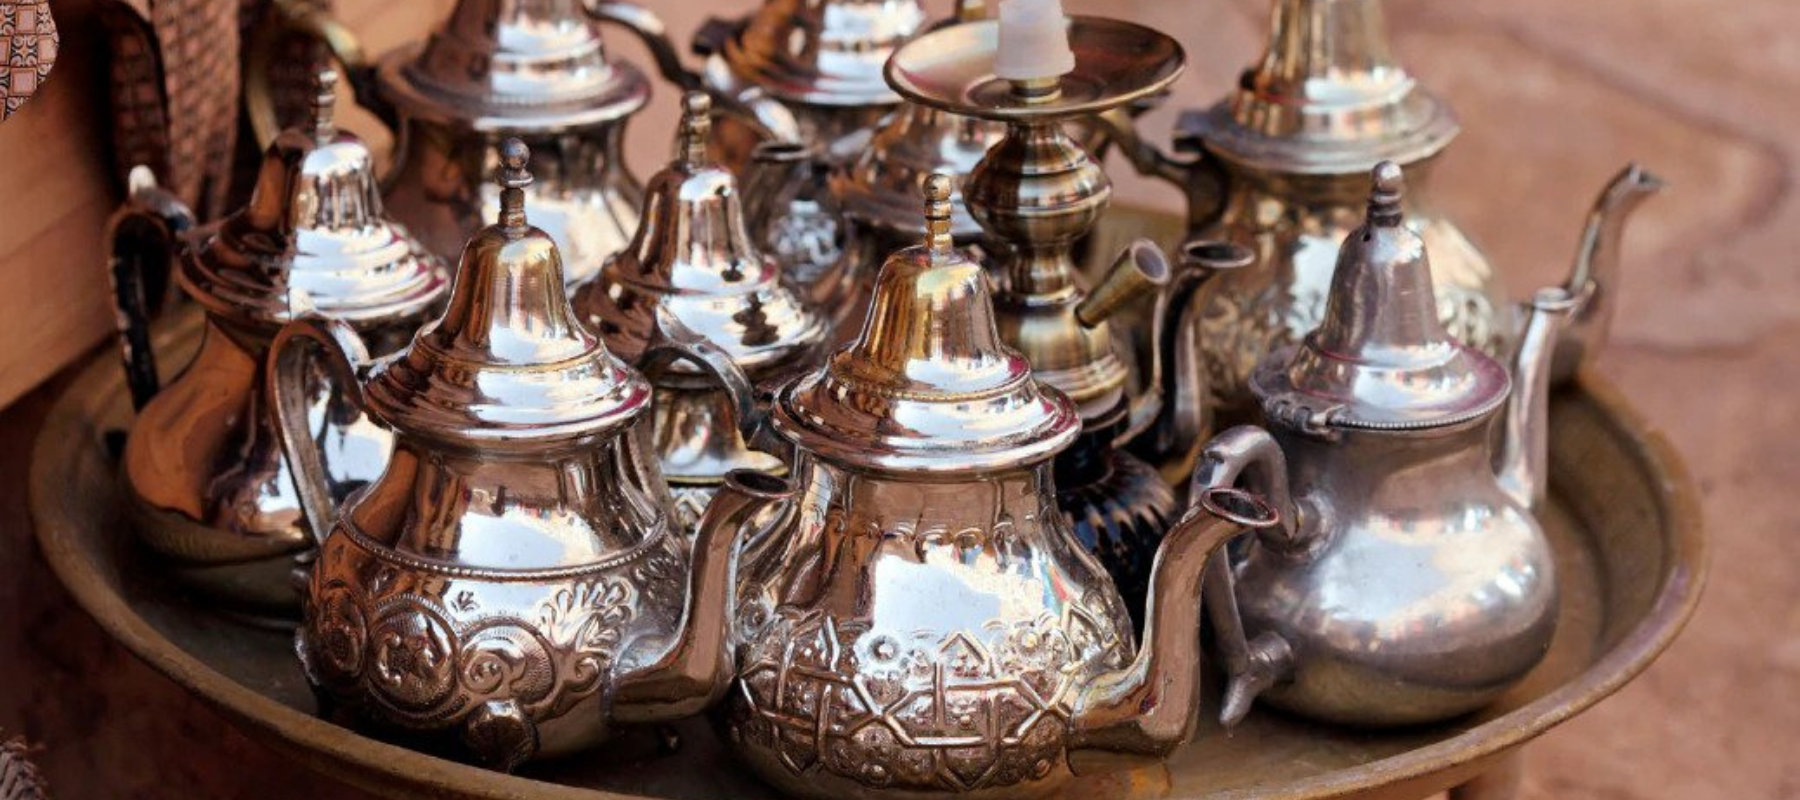 Tea set in the evening markets of Ouarzazate